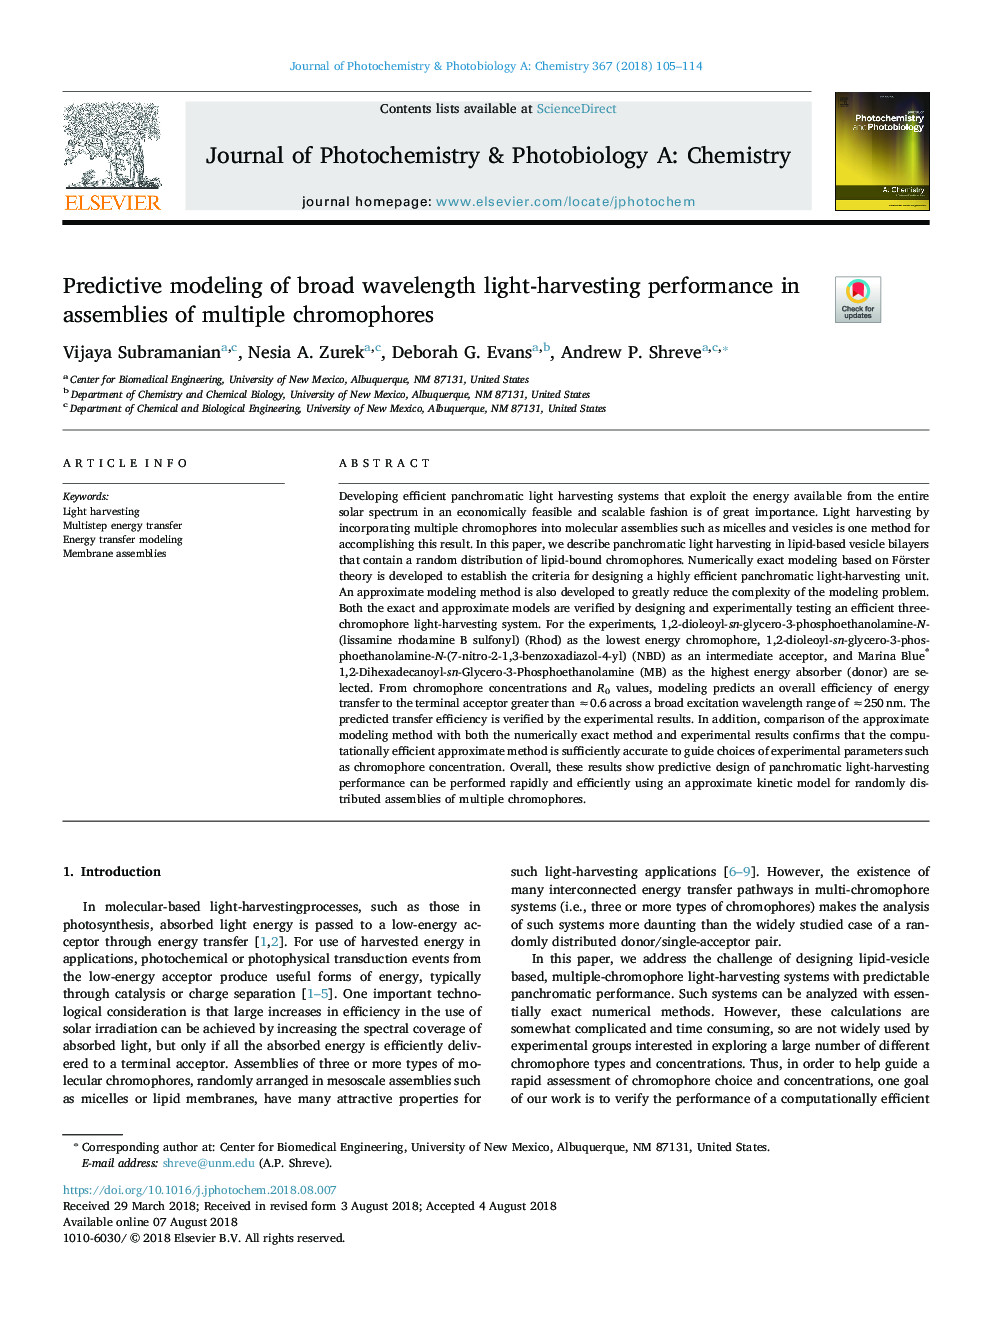 Predictive modeling of broad wavelength light-harvesting performance in assemblies of multiple chromophores